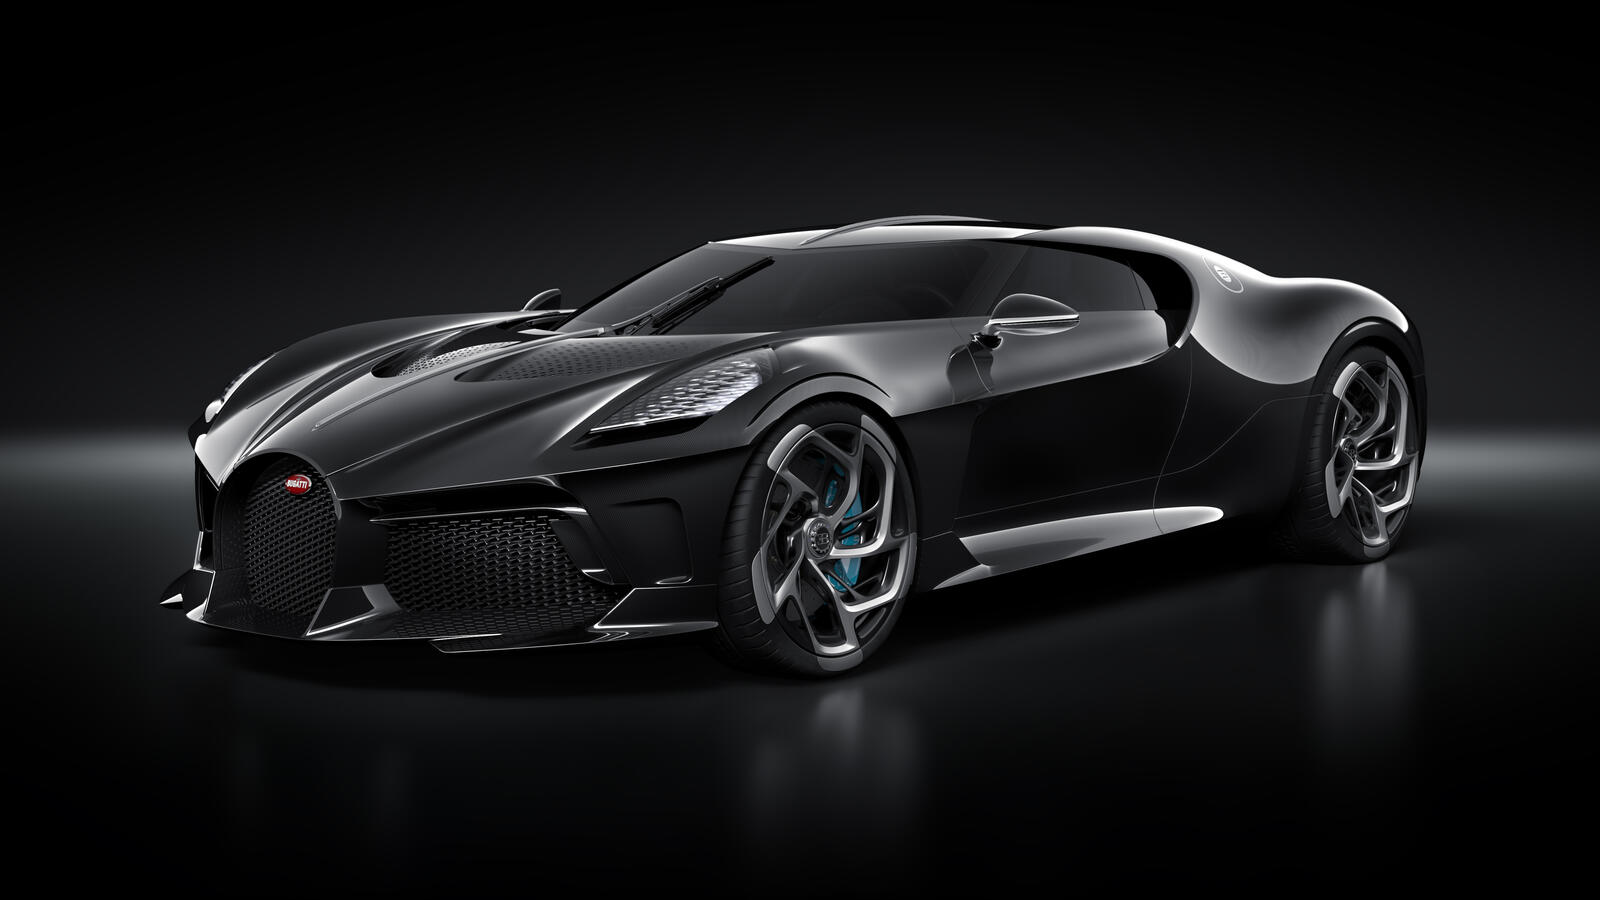 Free photo Black 2019 Bugatti La Voiture Noire on a dark background